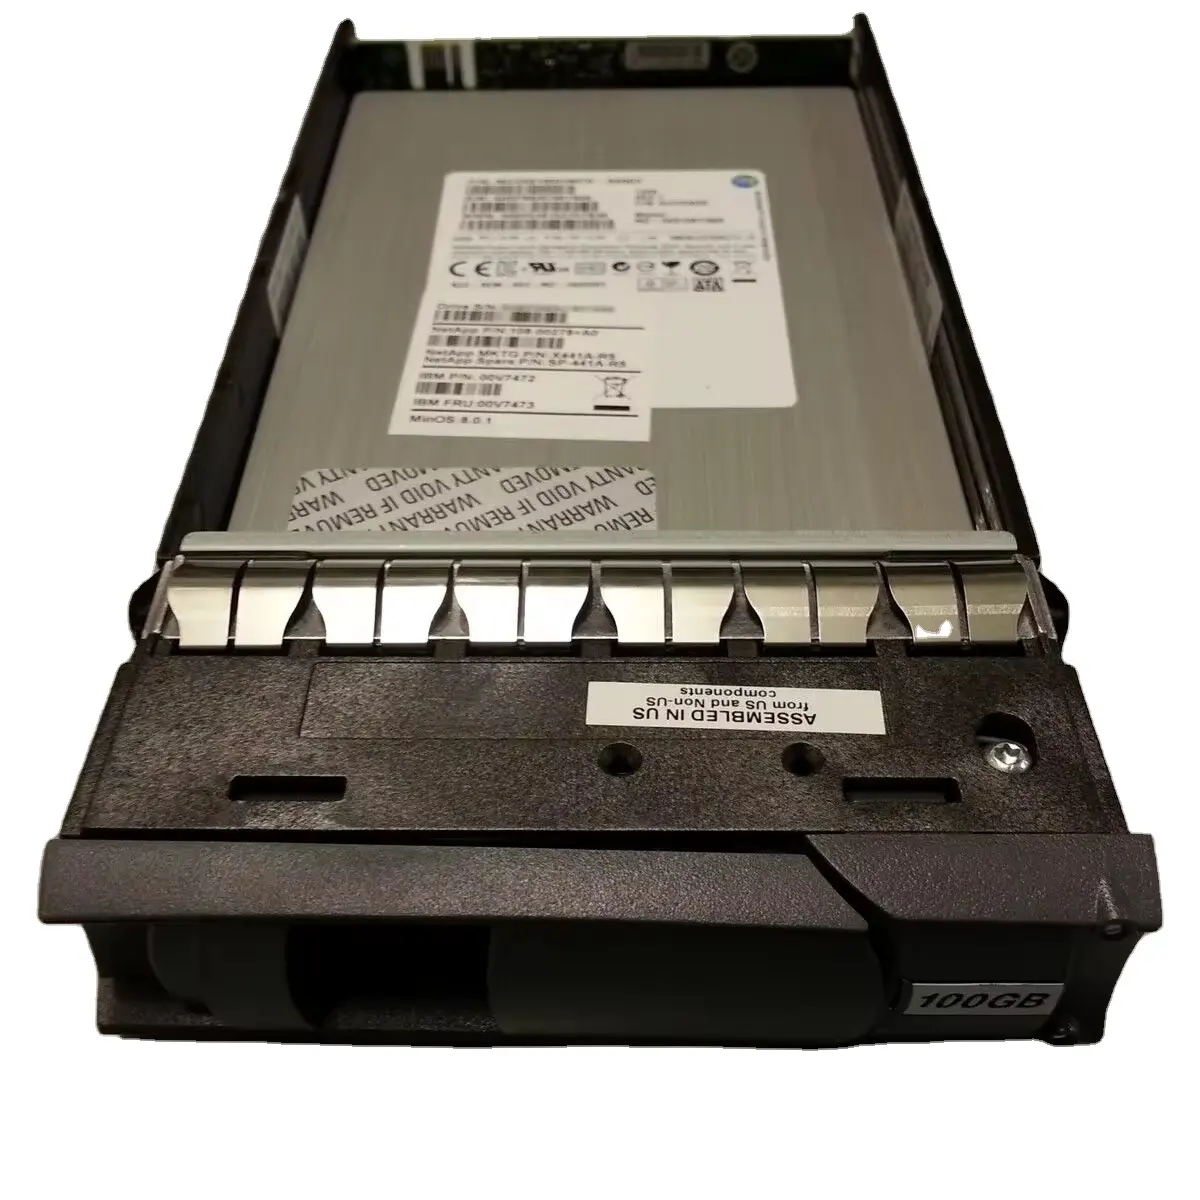 NETAPP X441A-R5 100GB SAS 6G LFF SSD disco rigido ad alte prestazioni